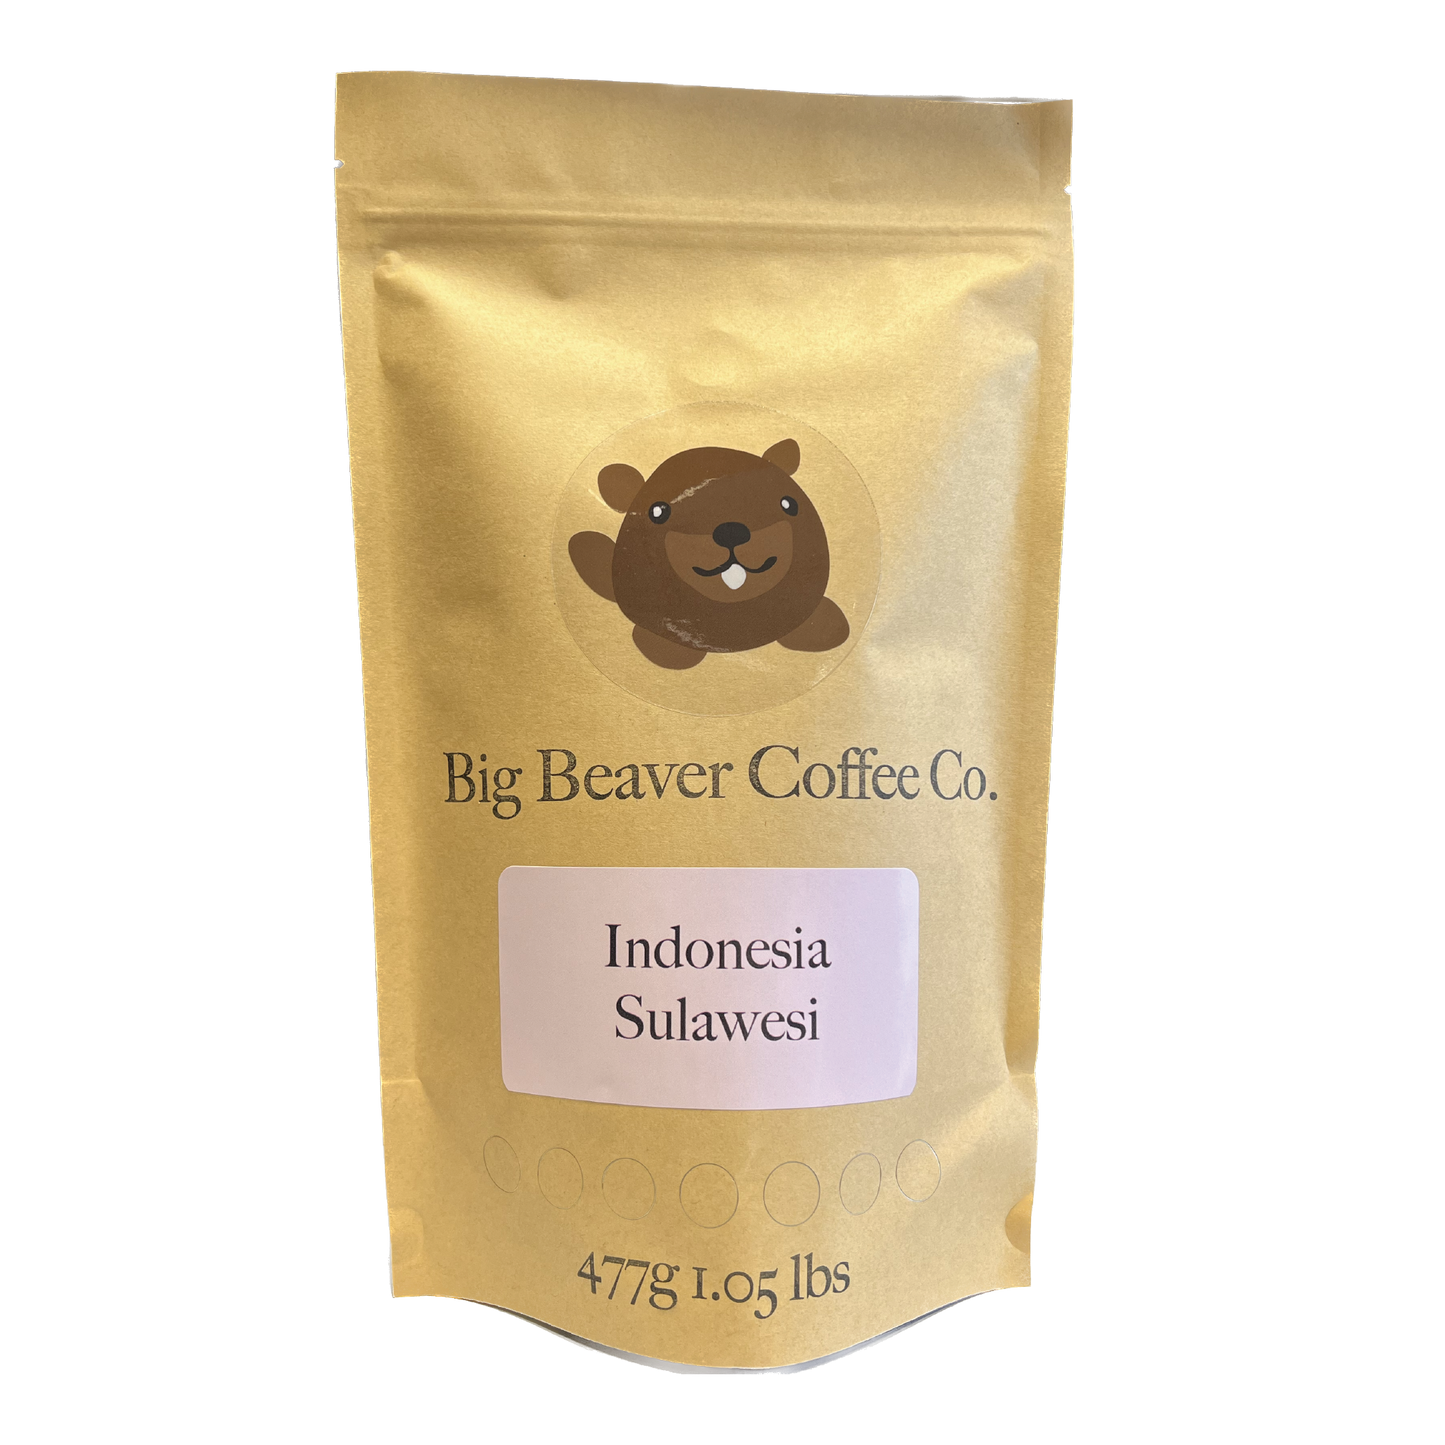 Big Beaver Coffee, Small Batch Roasting, Fluid Bed Roasting, Origin Coffee, Indonesia Sulawesi, Whole Bean, Ground Coffee.